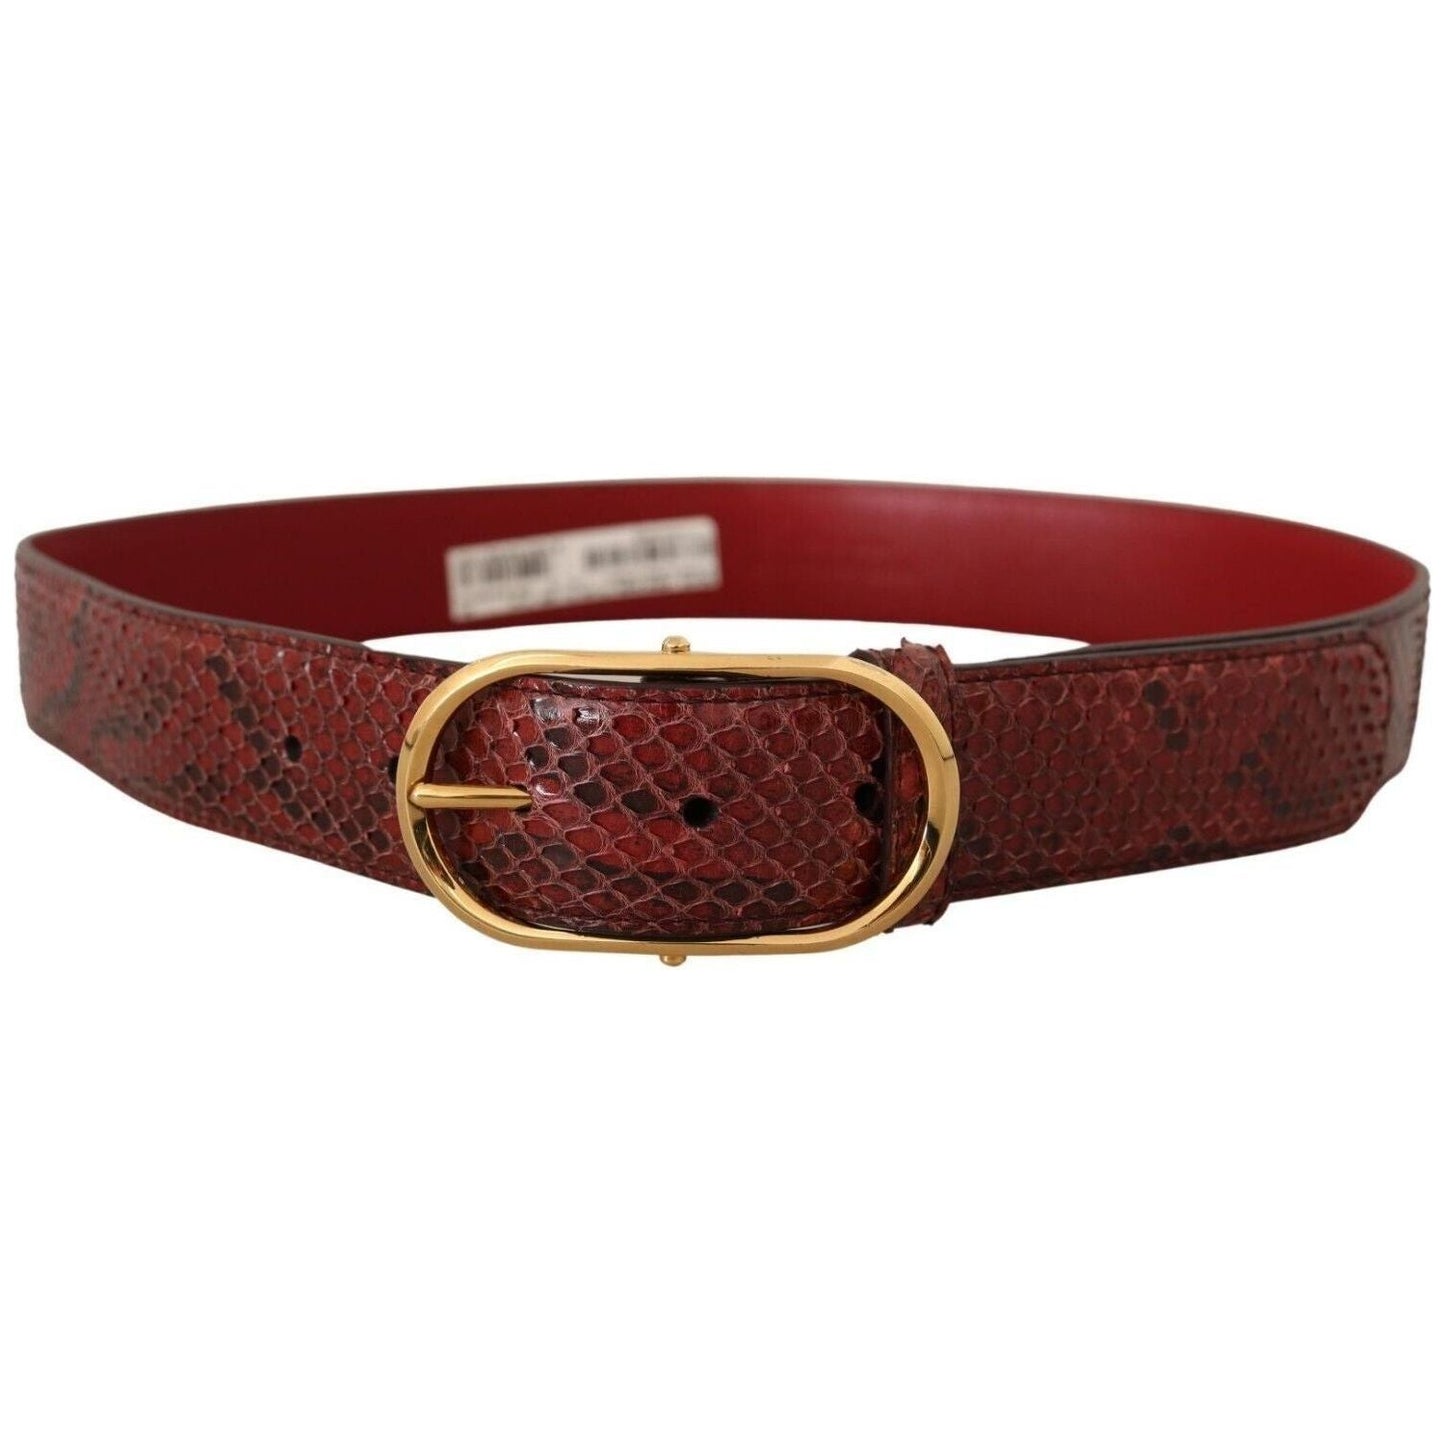 Dolce & Gabbana Elegant Red Snakeskin Leather Belt red-exotic-leather-gold-oval-buckle-belt-1 s-l1600-289-a3a62384-683.jpg